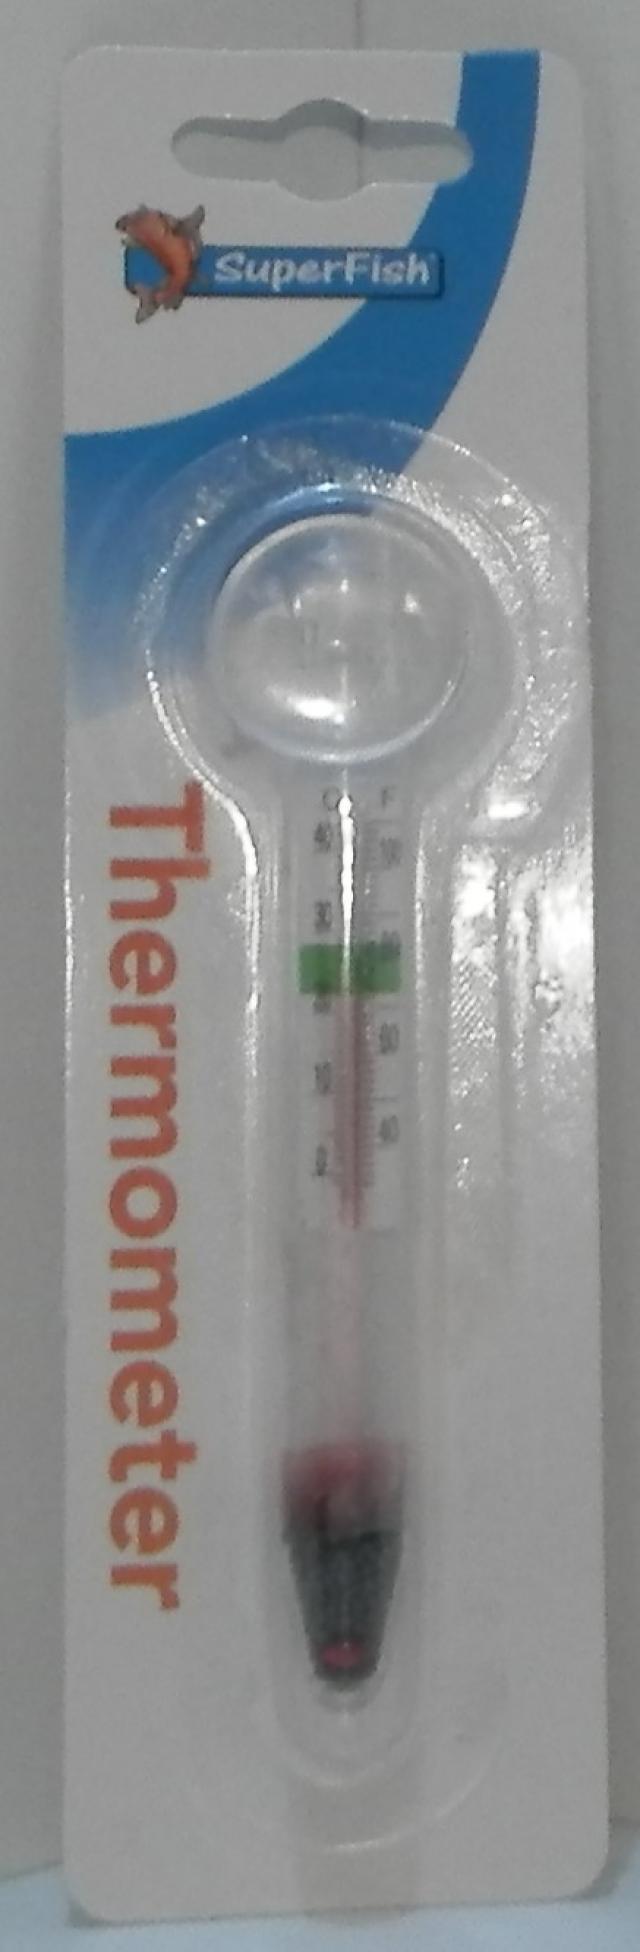 SuperFish thermometer